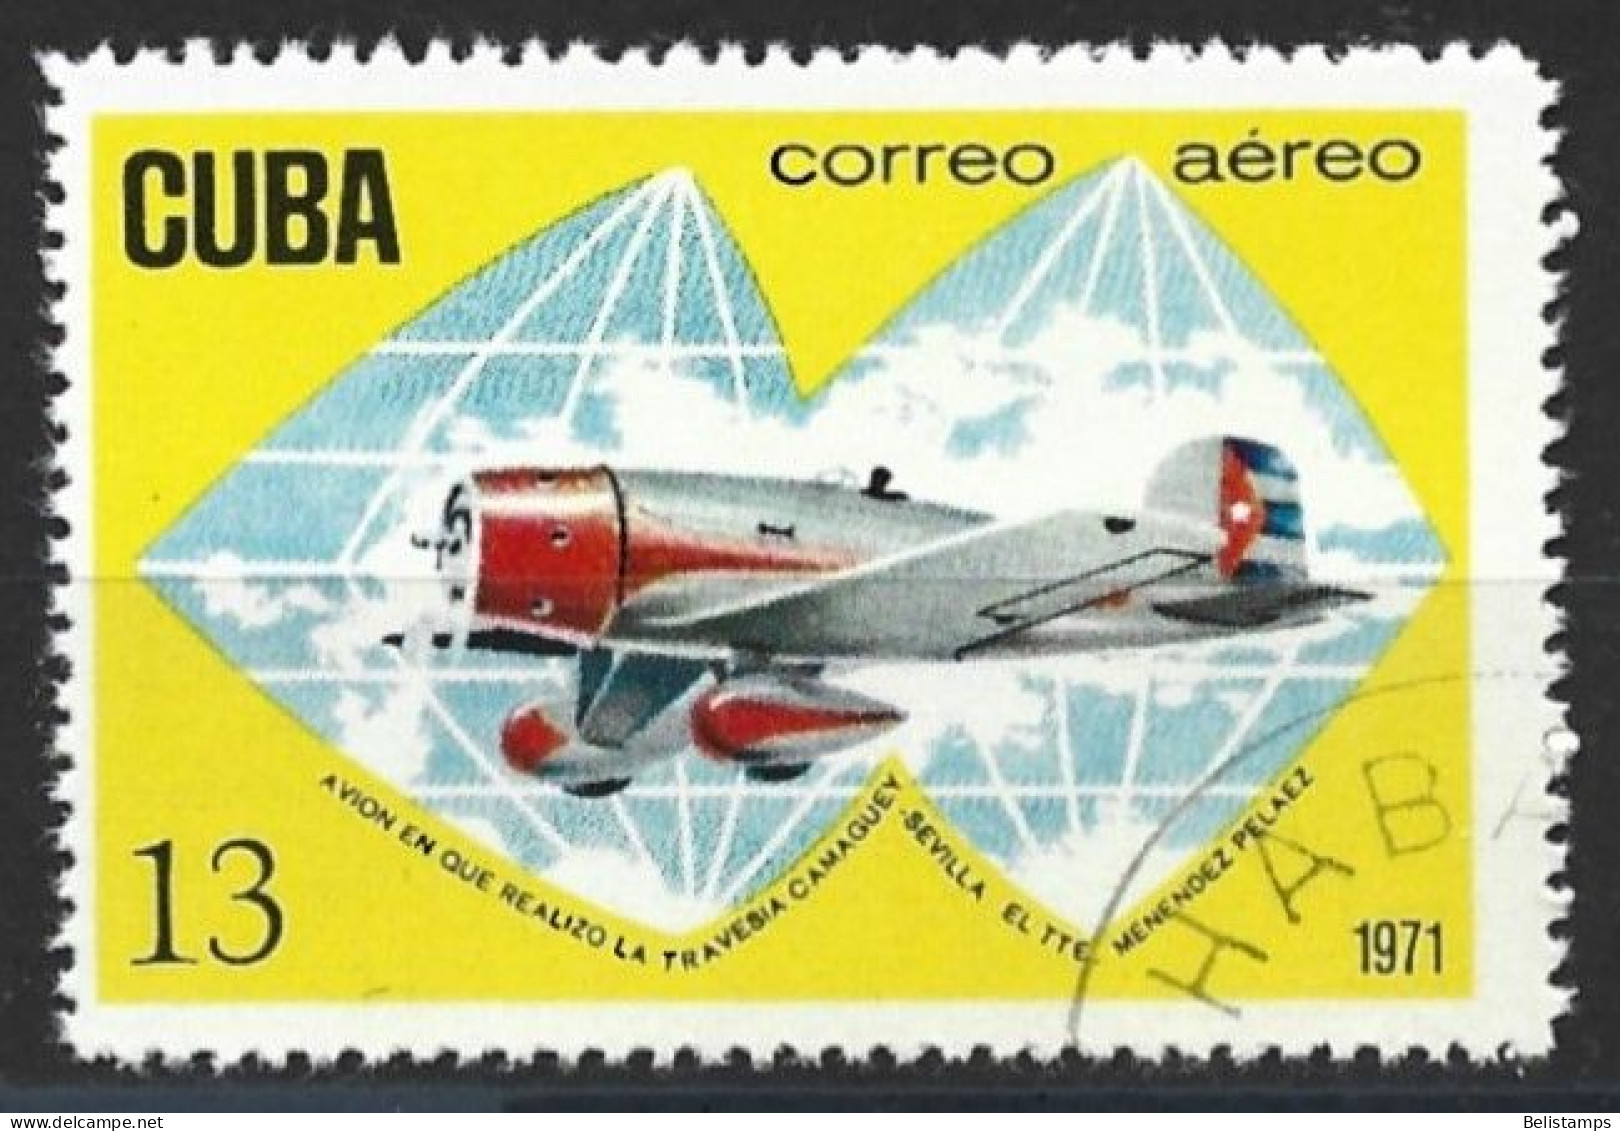 Cuba 1971. Scott #C247 (U) Camaguey-Seville Flight, 35th Anniv, Aircraft - Luftpost